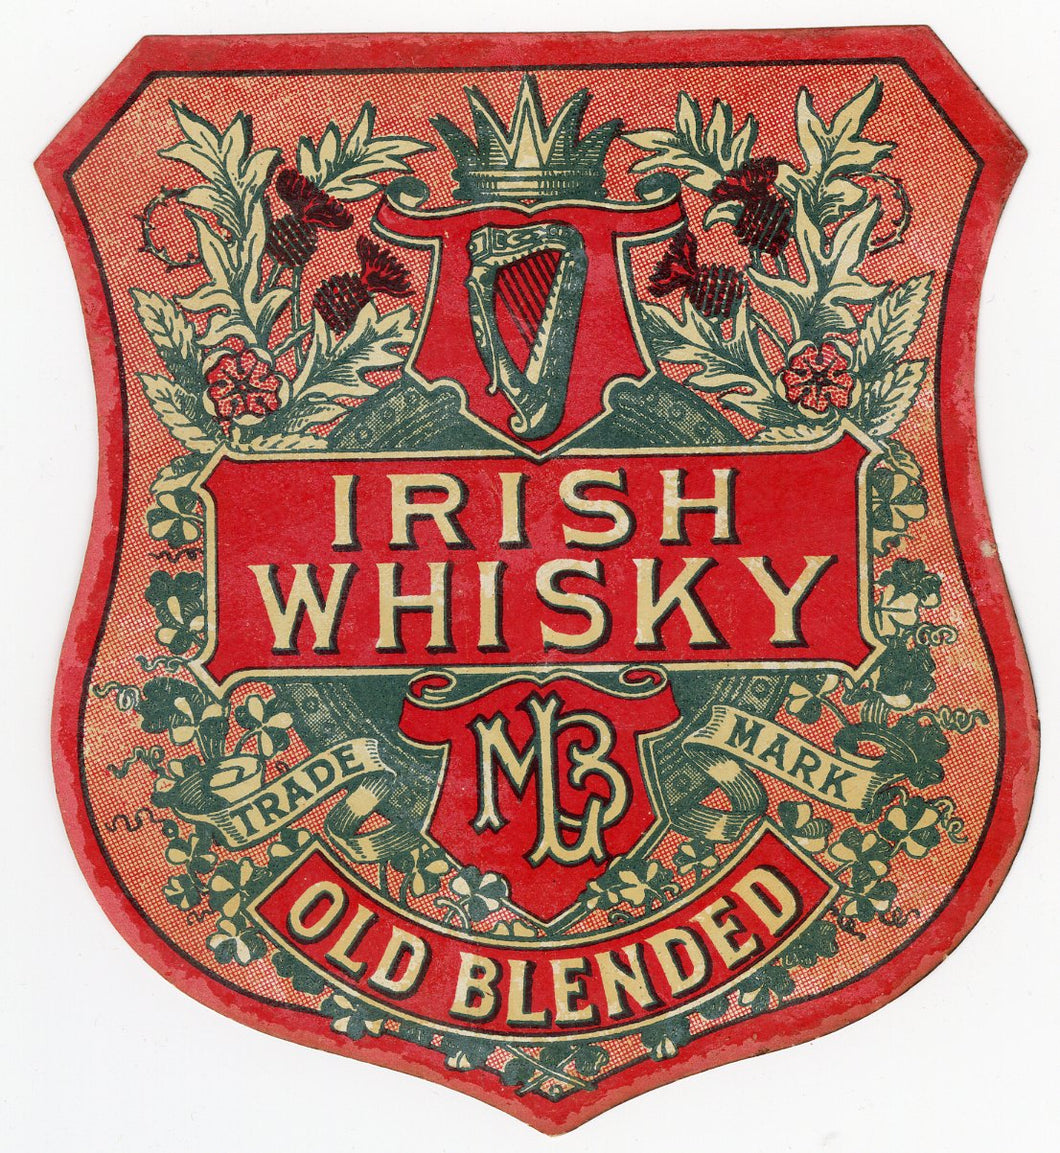 MLB IRISH WHISKEY Label || Trademarked, Old Blended, Vintage - TheBoxSF